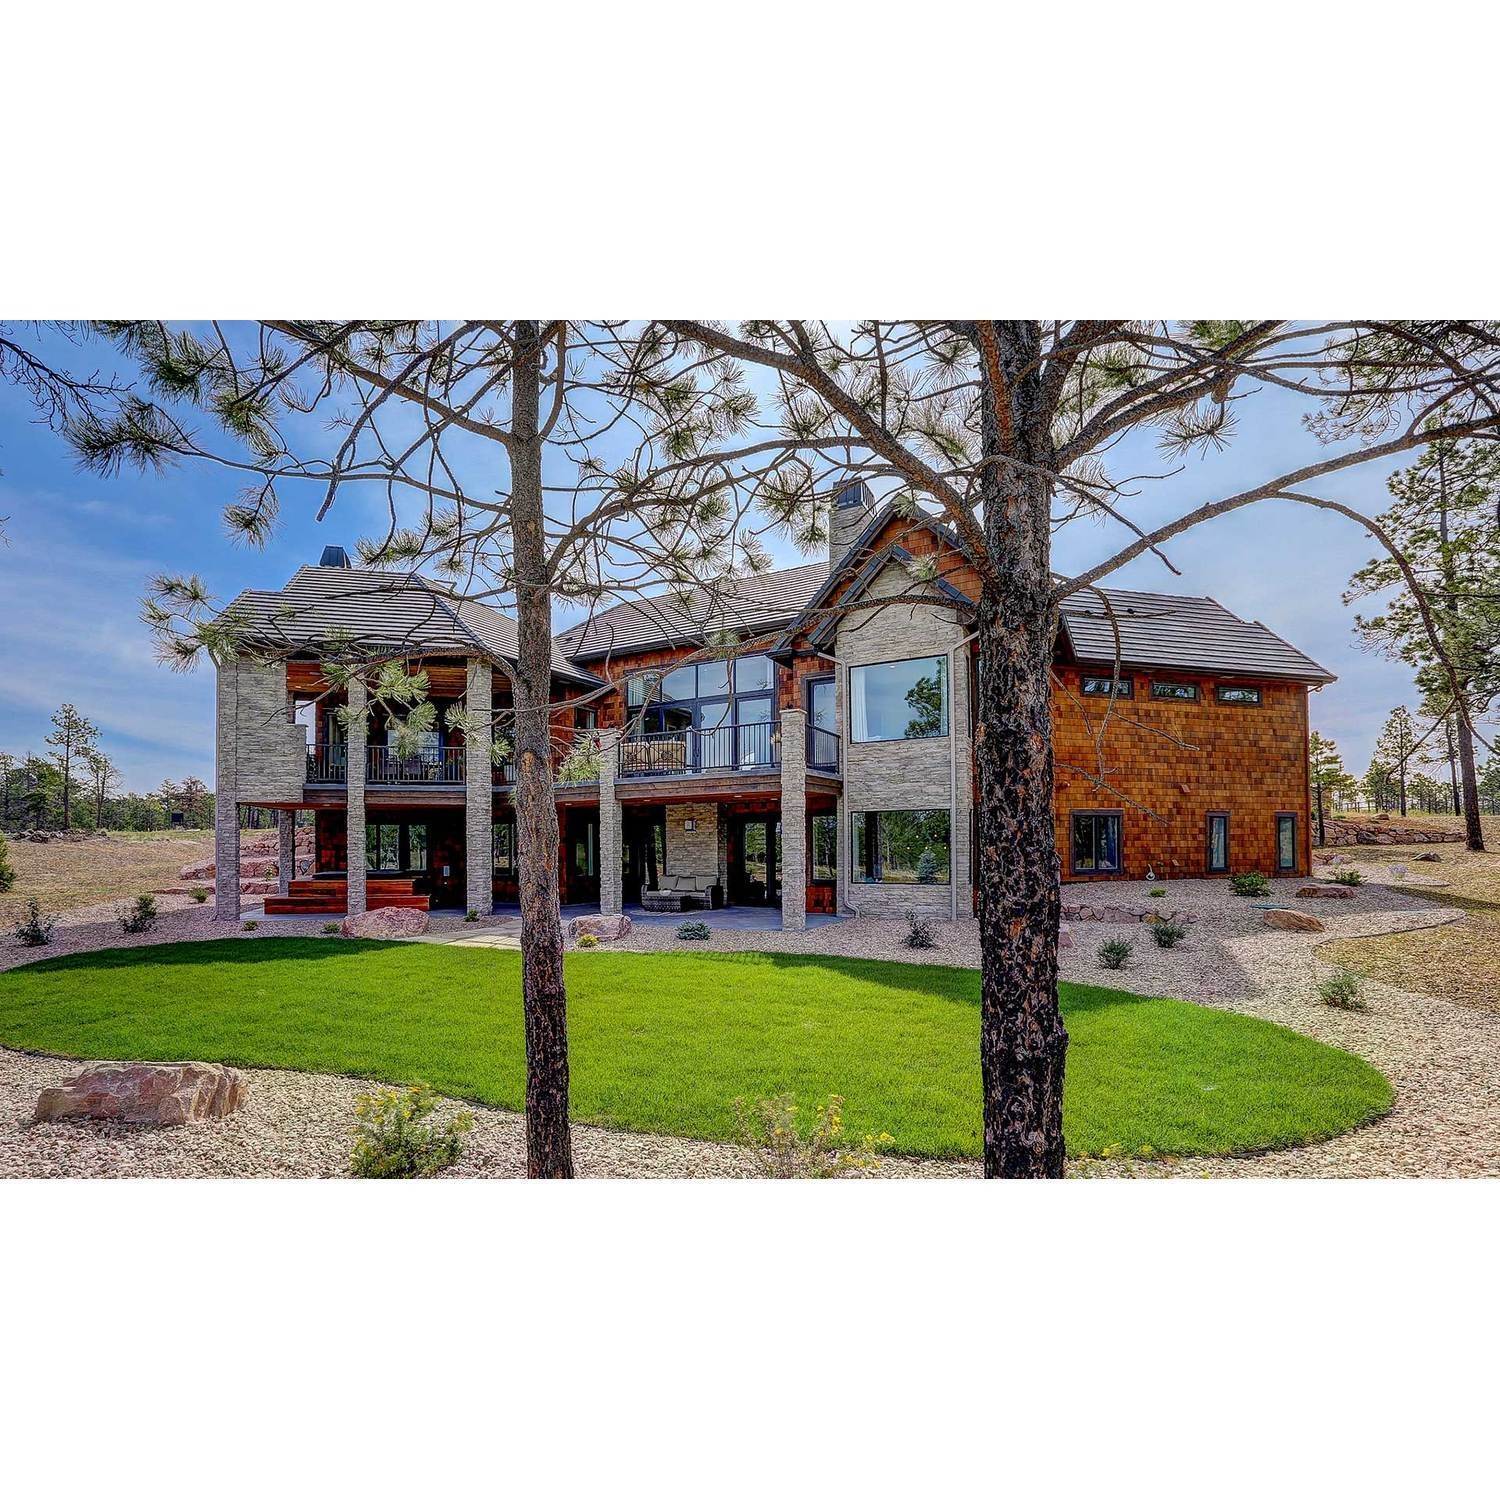 37. Galiant Homes xây dựng tại 4783 Farmingdale Dr, Colorado Springs, CO 80918